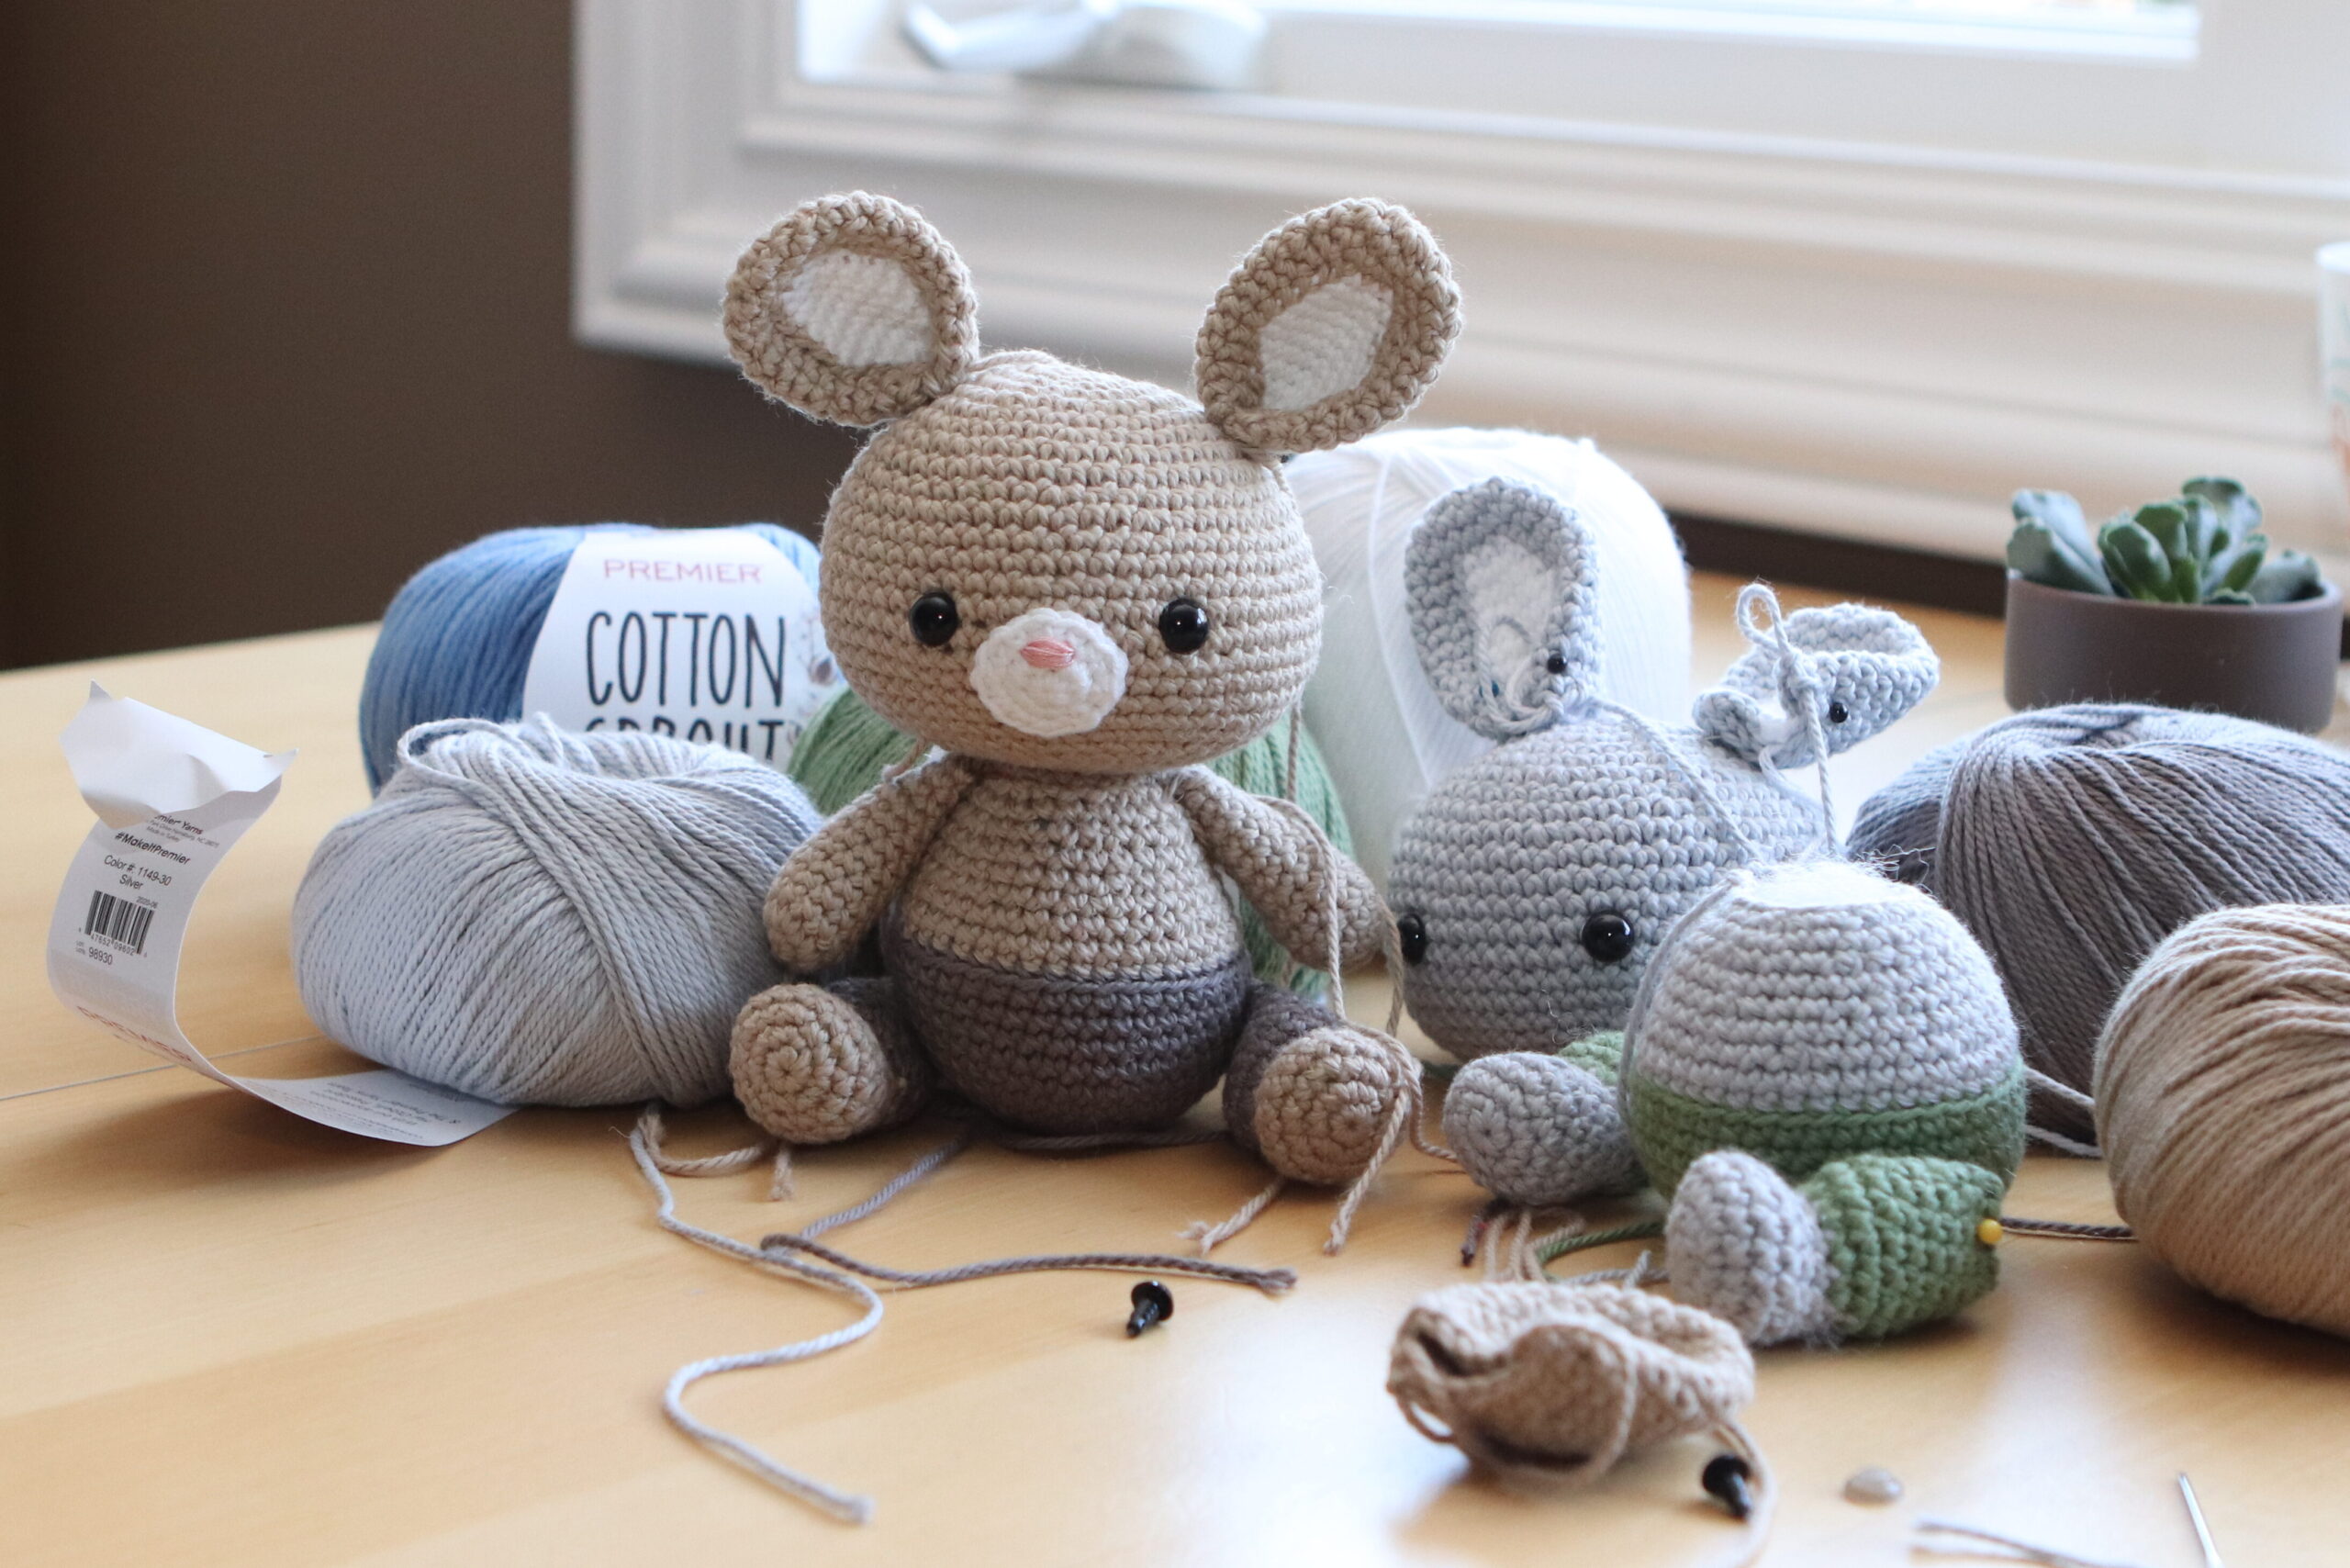 Crochet Animal Pattern, Cute Tiger and Panda Crochet Toy, Set of 2